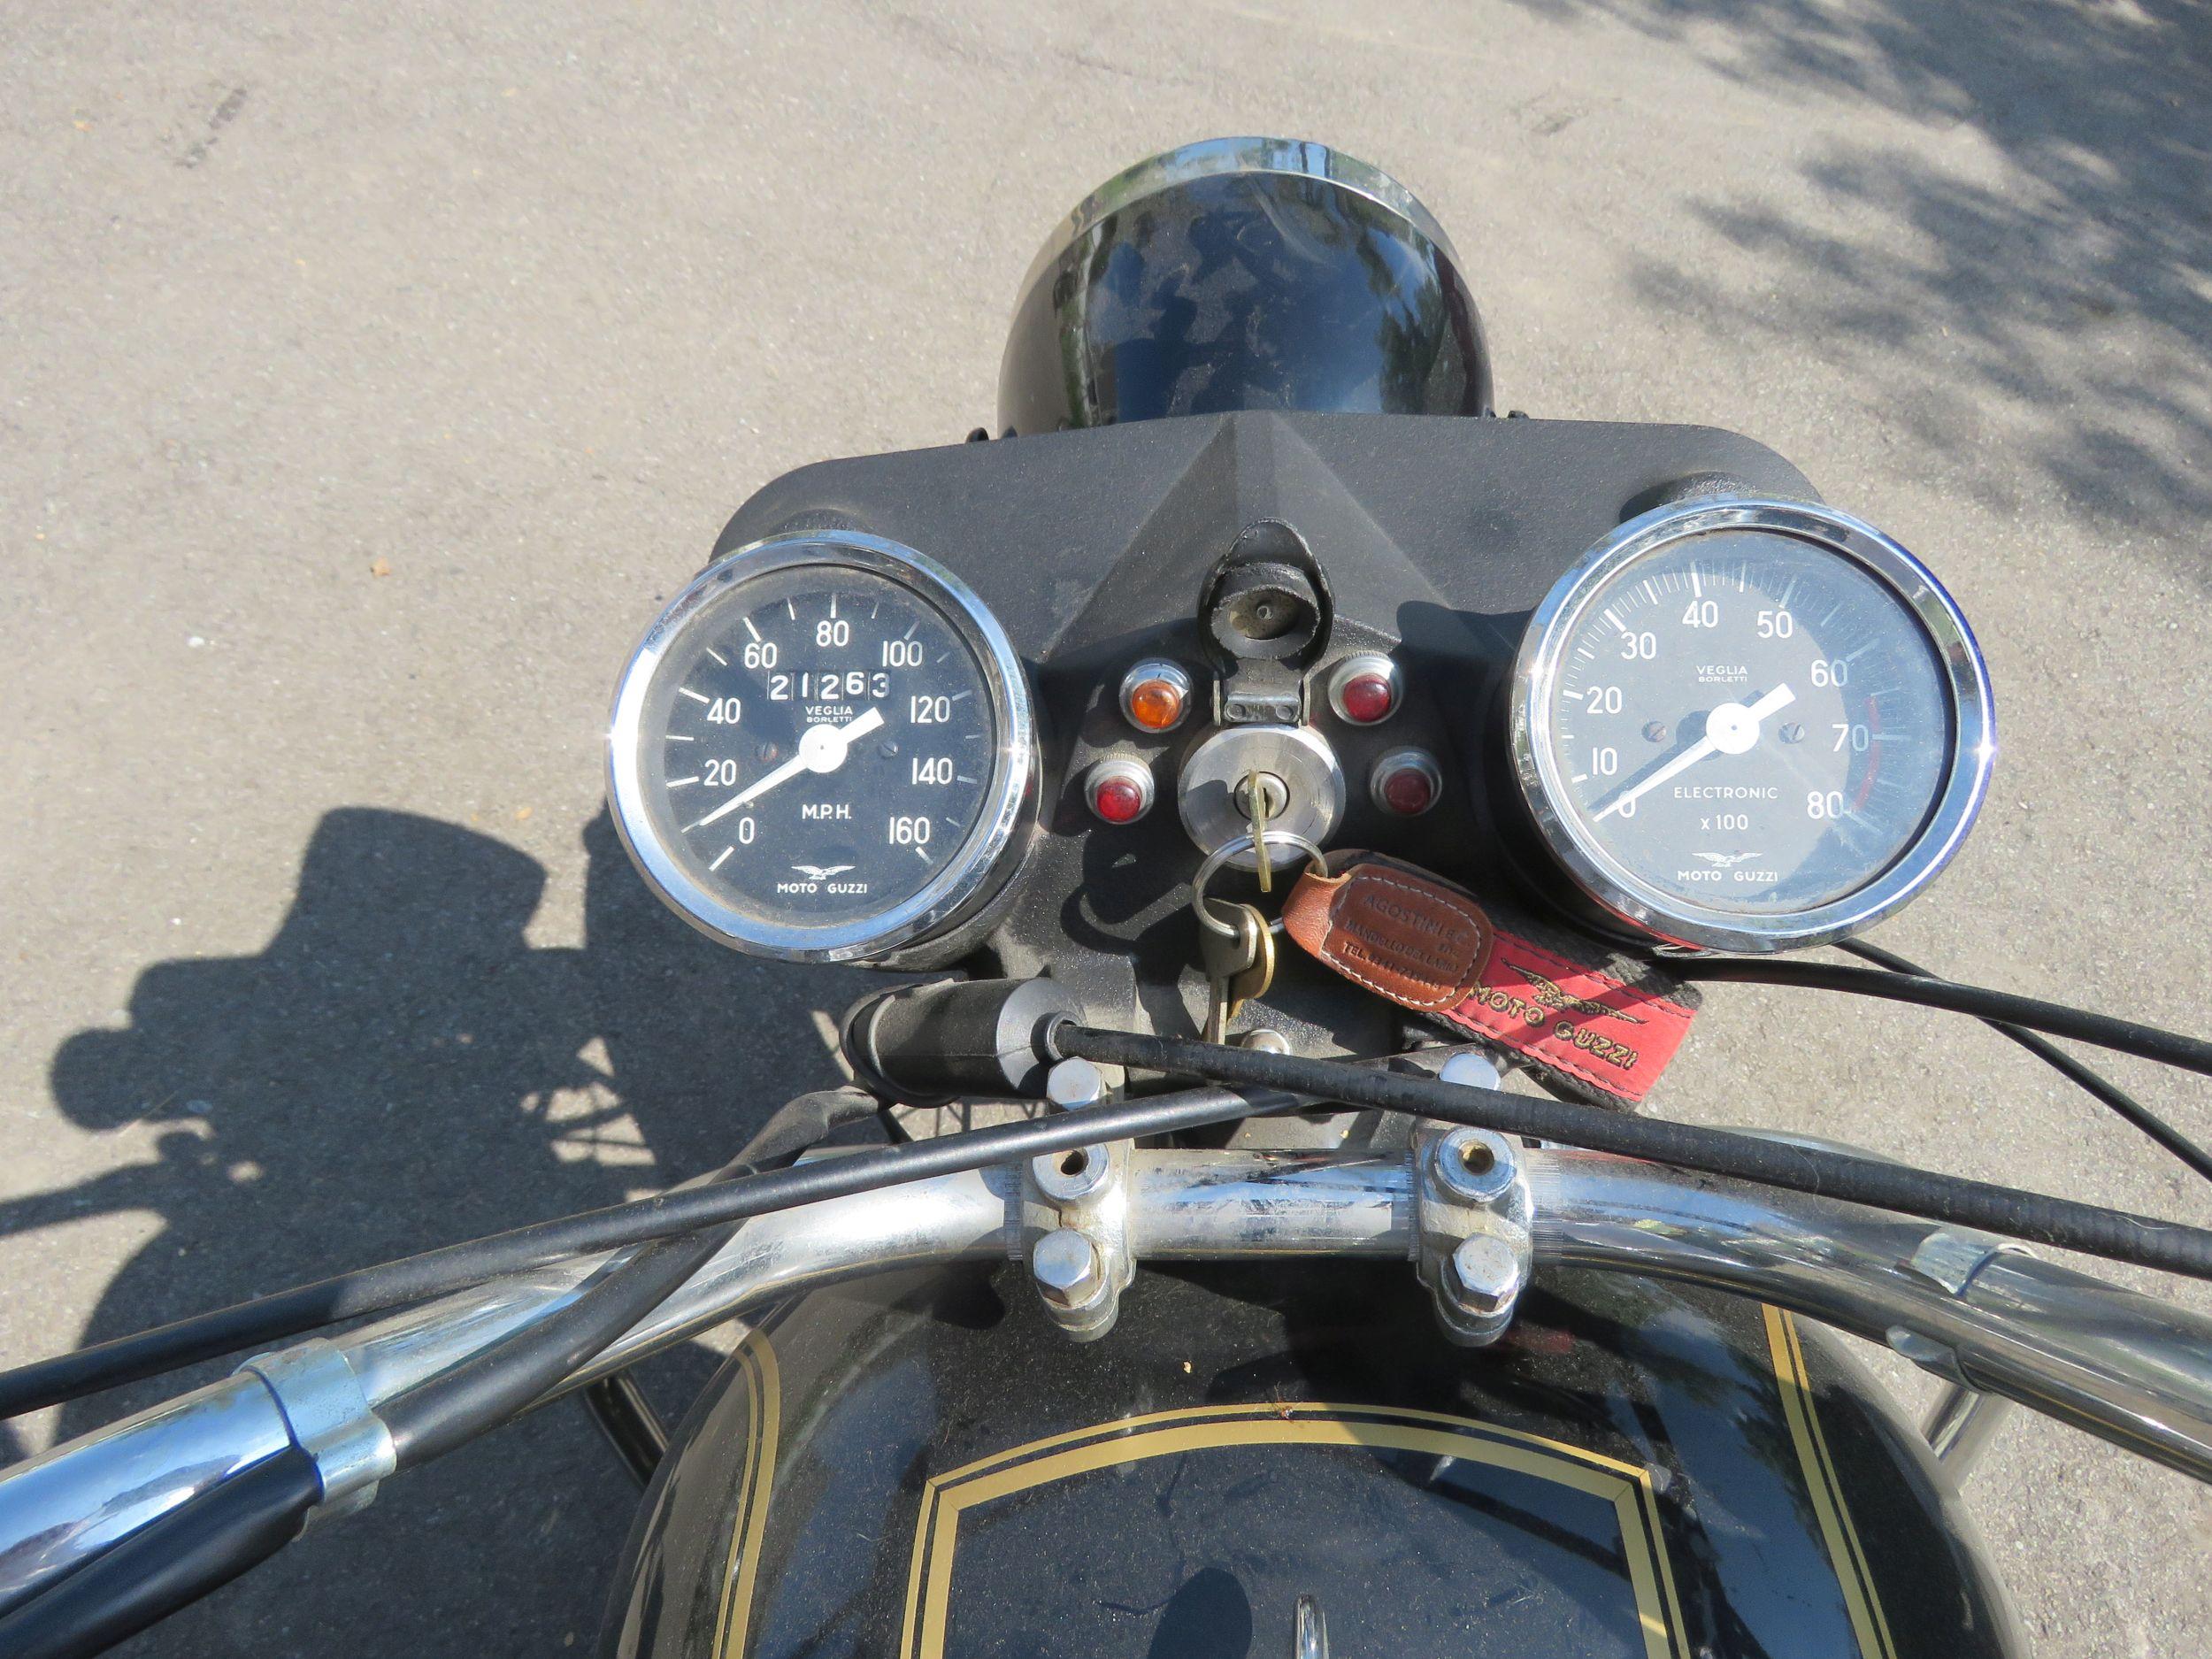 1972 Moto Guzzi 850 Eldorado Motorcycle